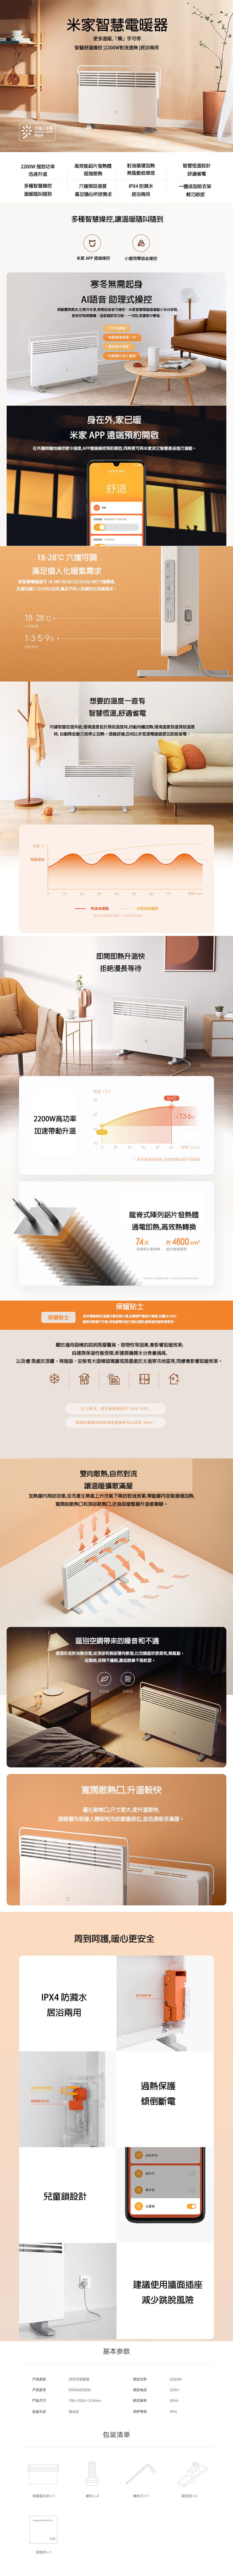 Xiaomi Mijia Smart Electric Heater